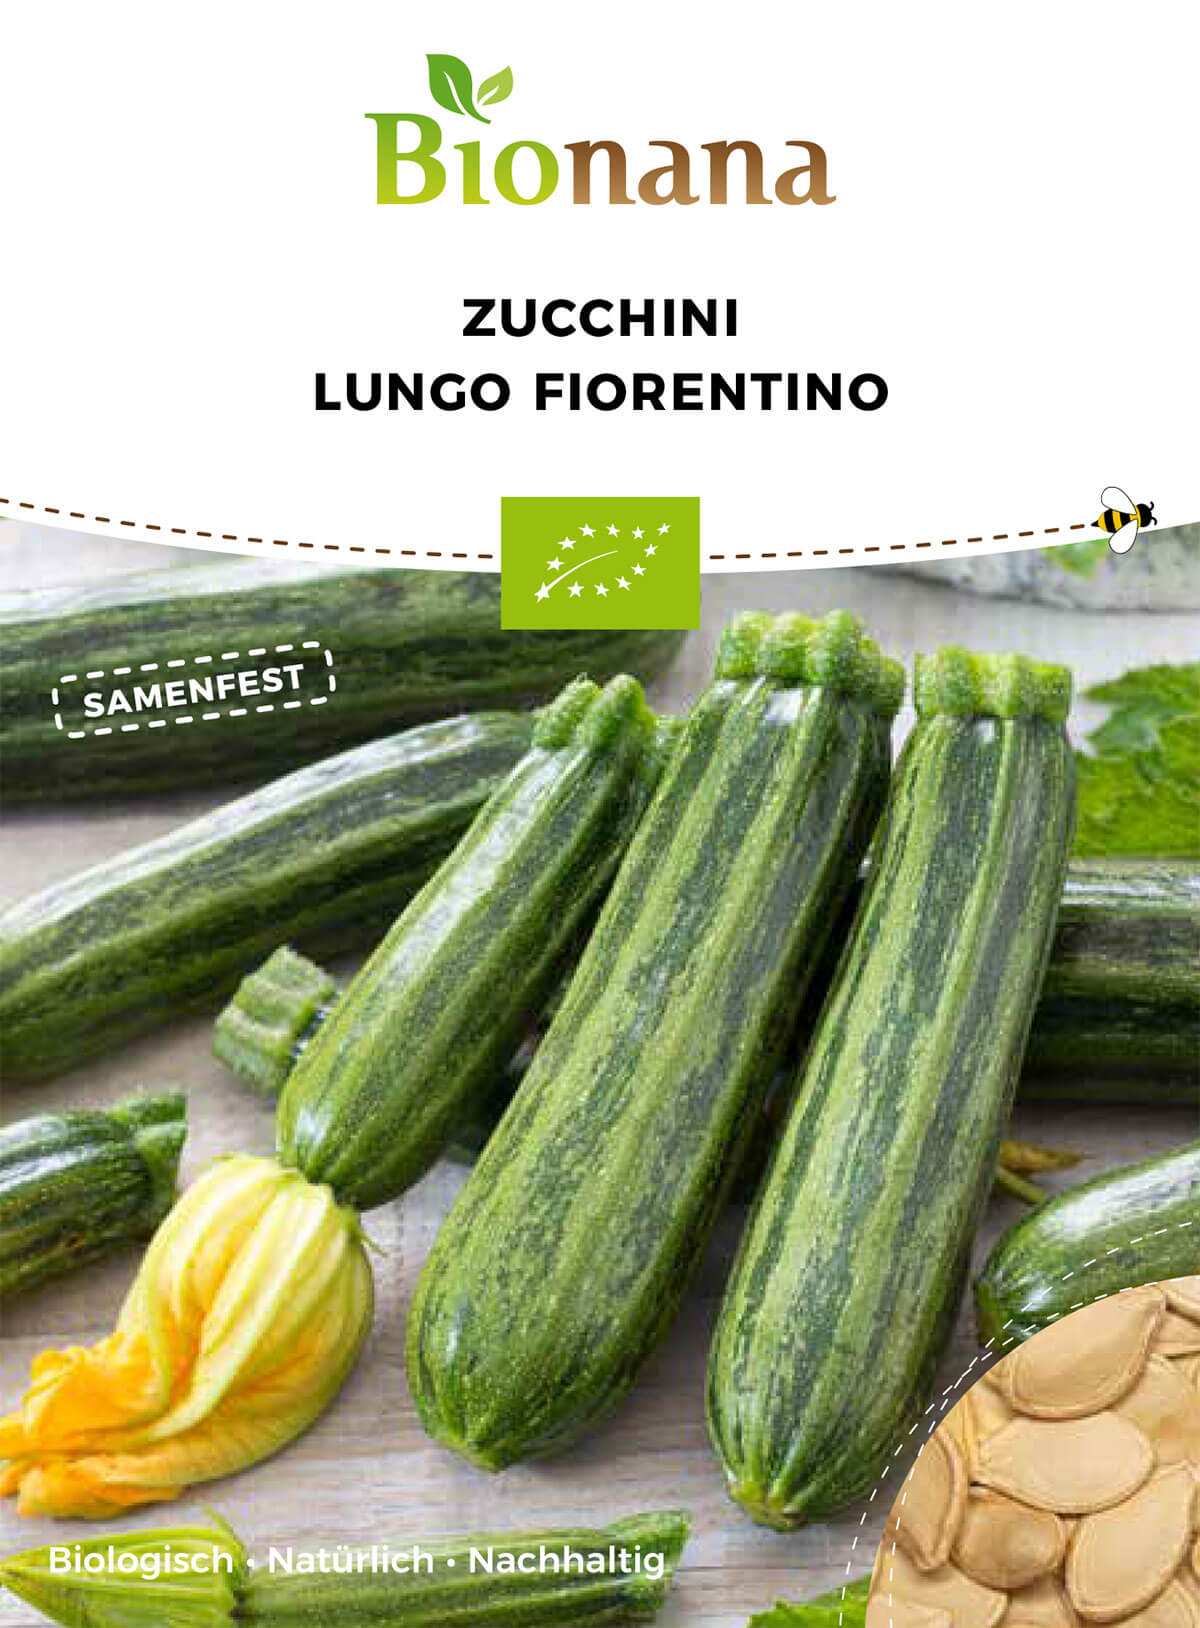 Zucchini Lungo Fiorentino | BIO Zucchinisamen von Bionana